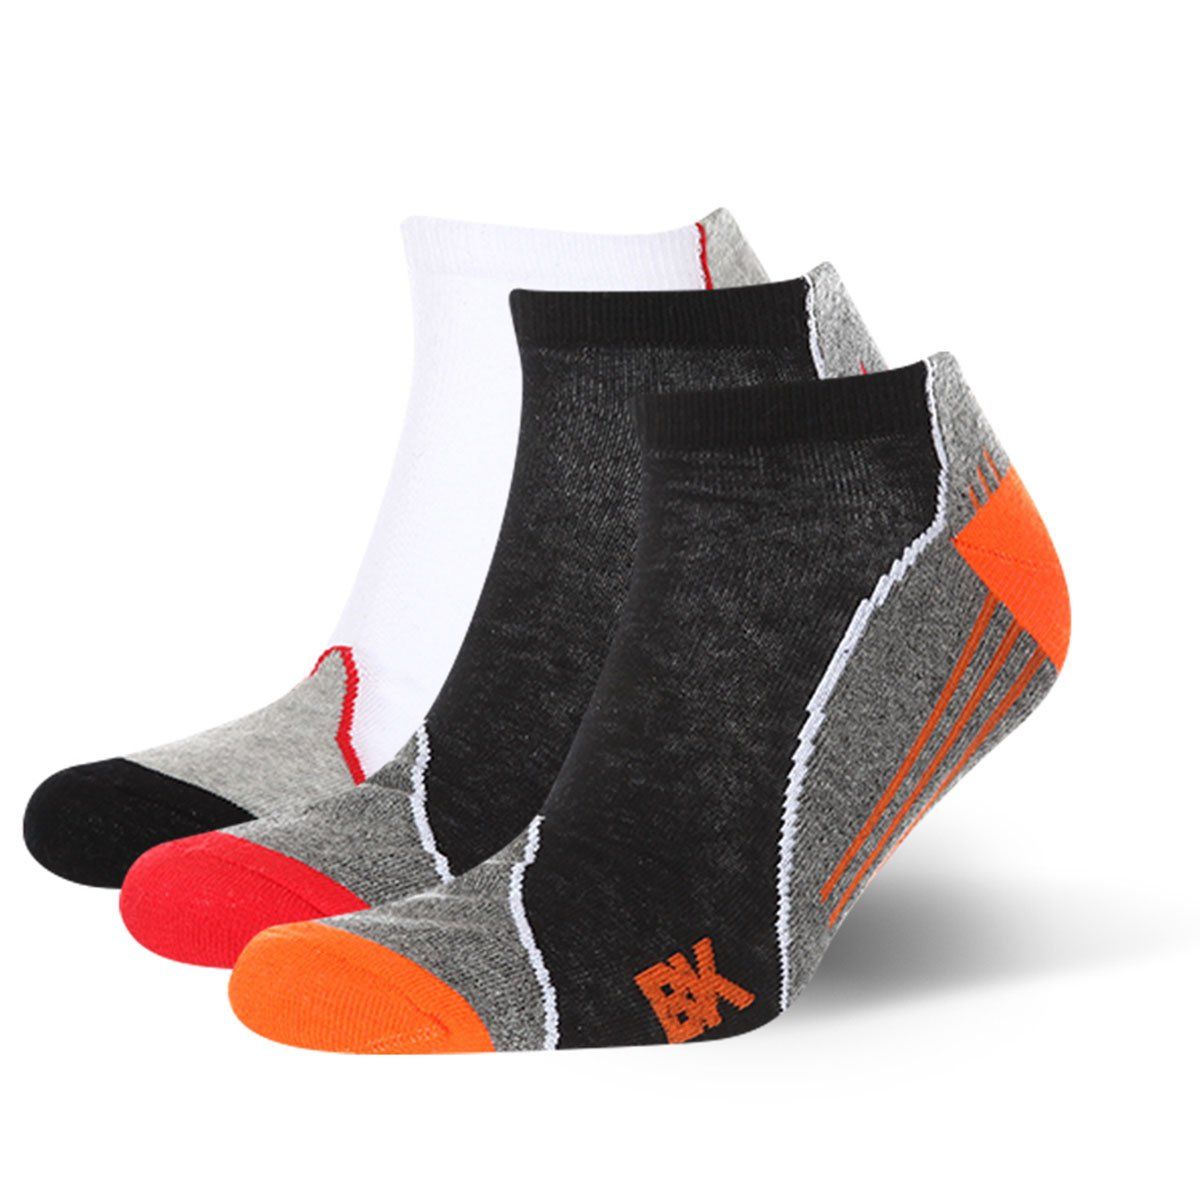 Носки BK sport technic sneaker socks men terry. В наборе 3 пары разной расцветки.